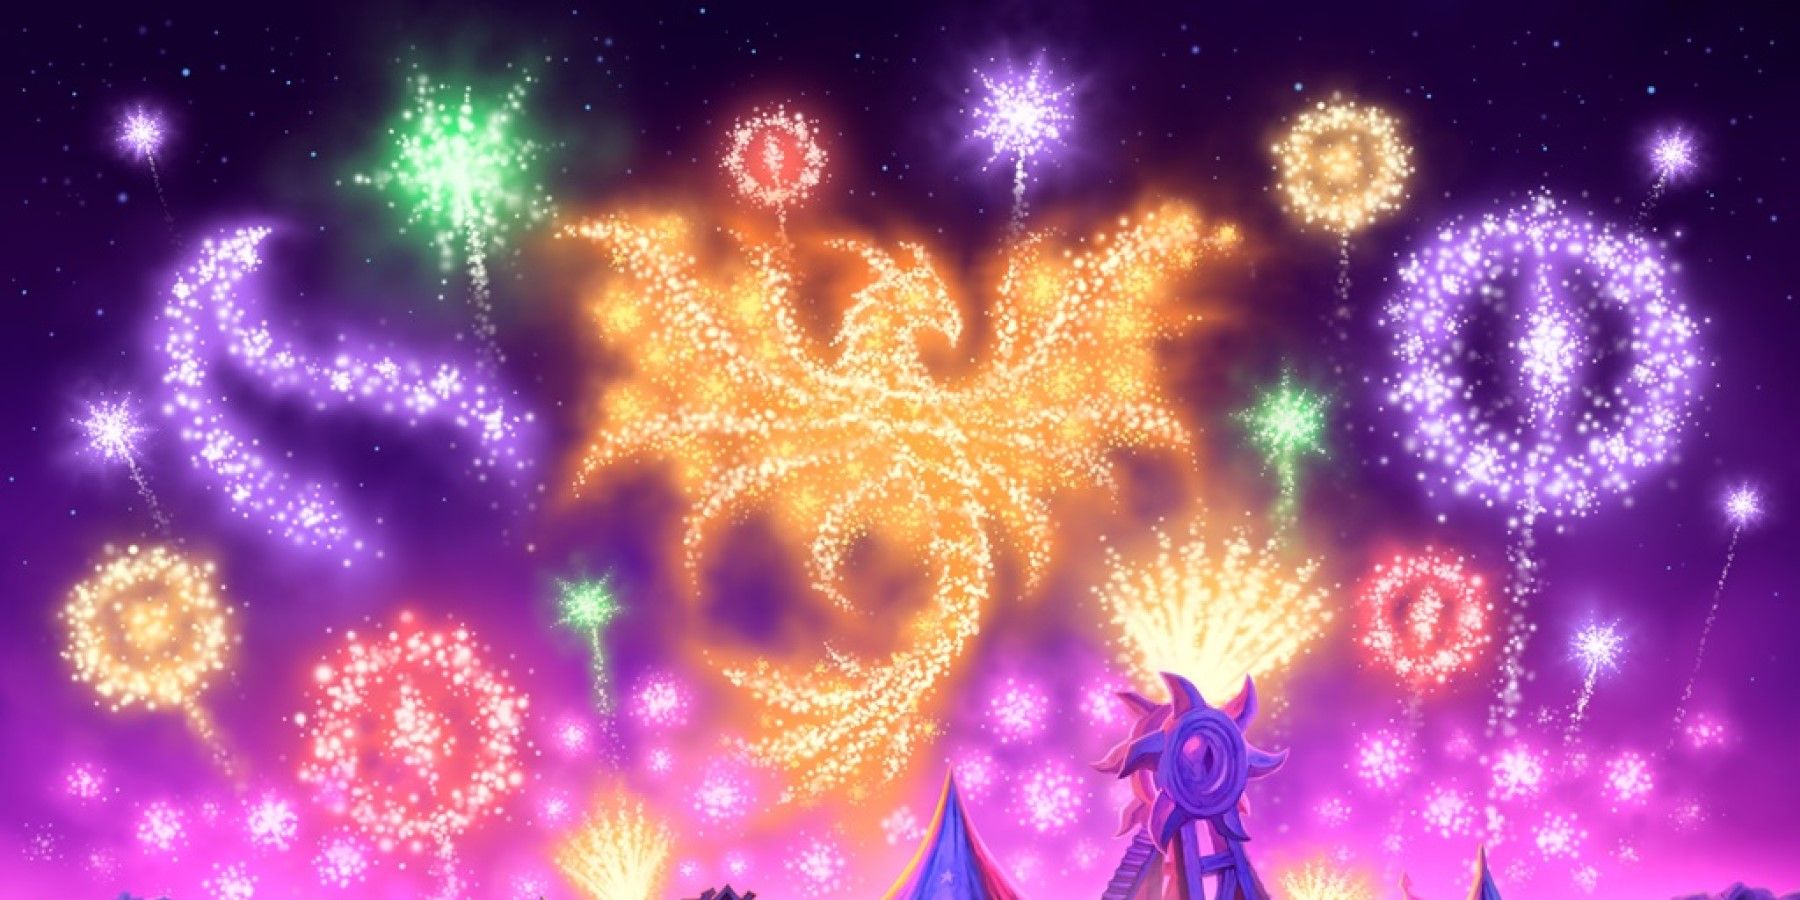 grand finale fireworks from hearthstone world of warcraft darkmoon faire